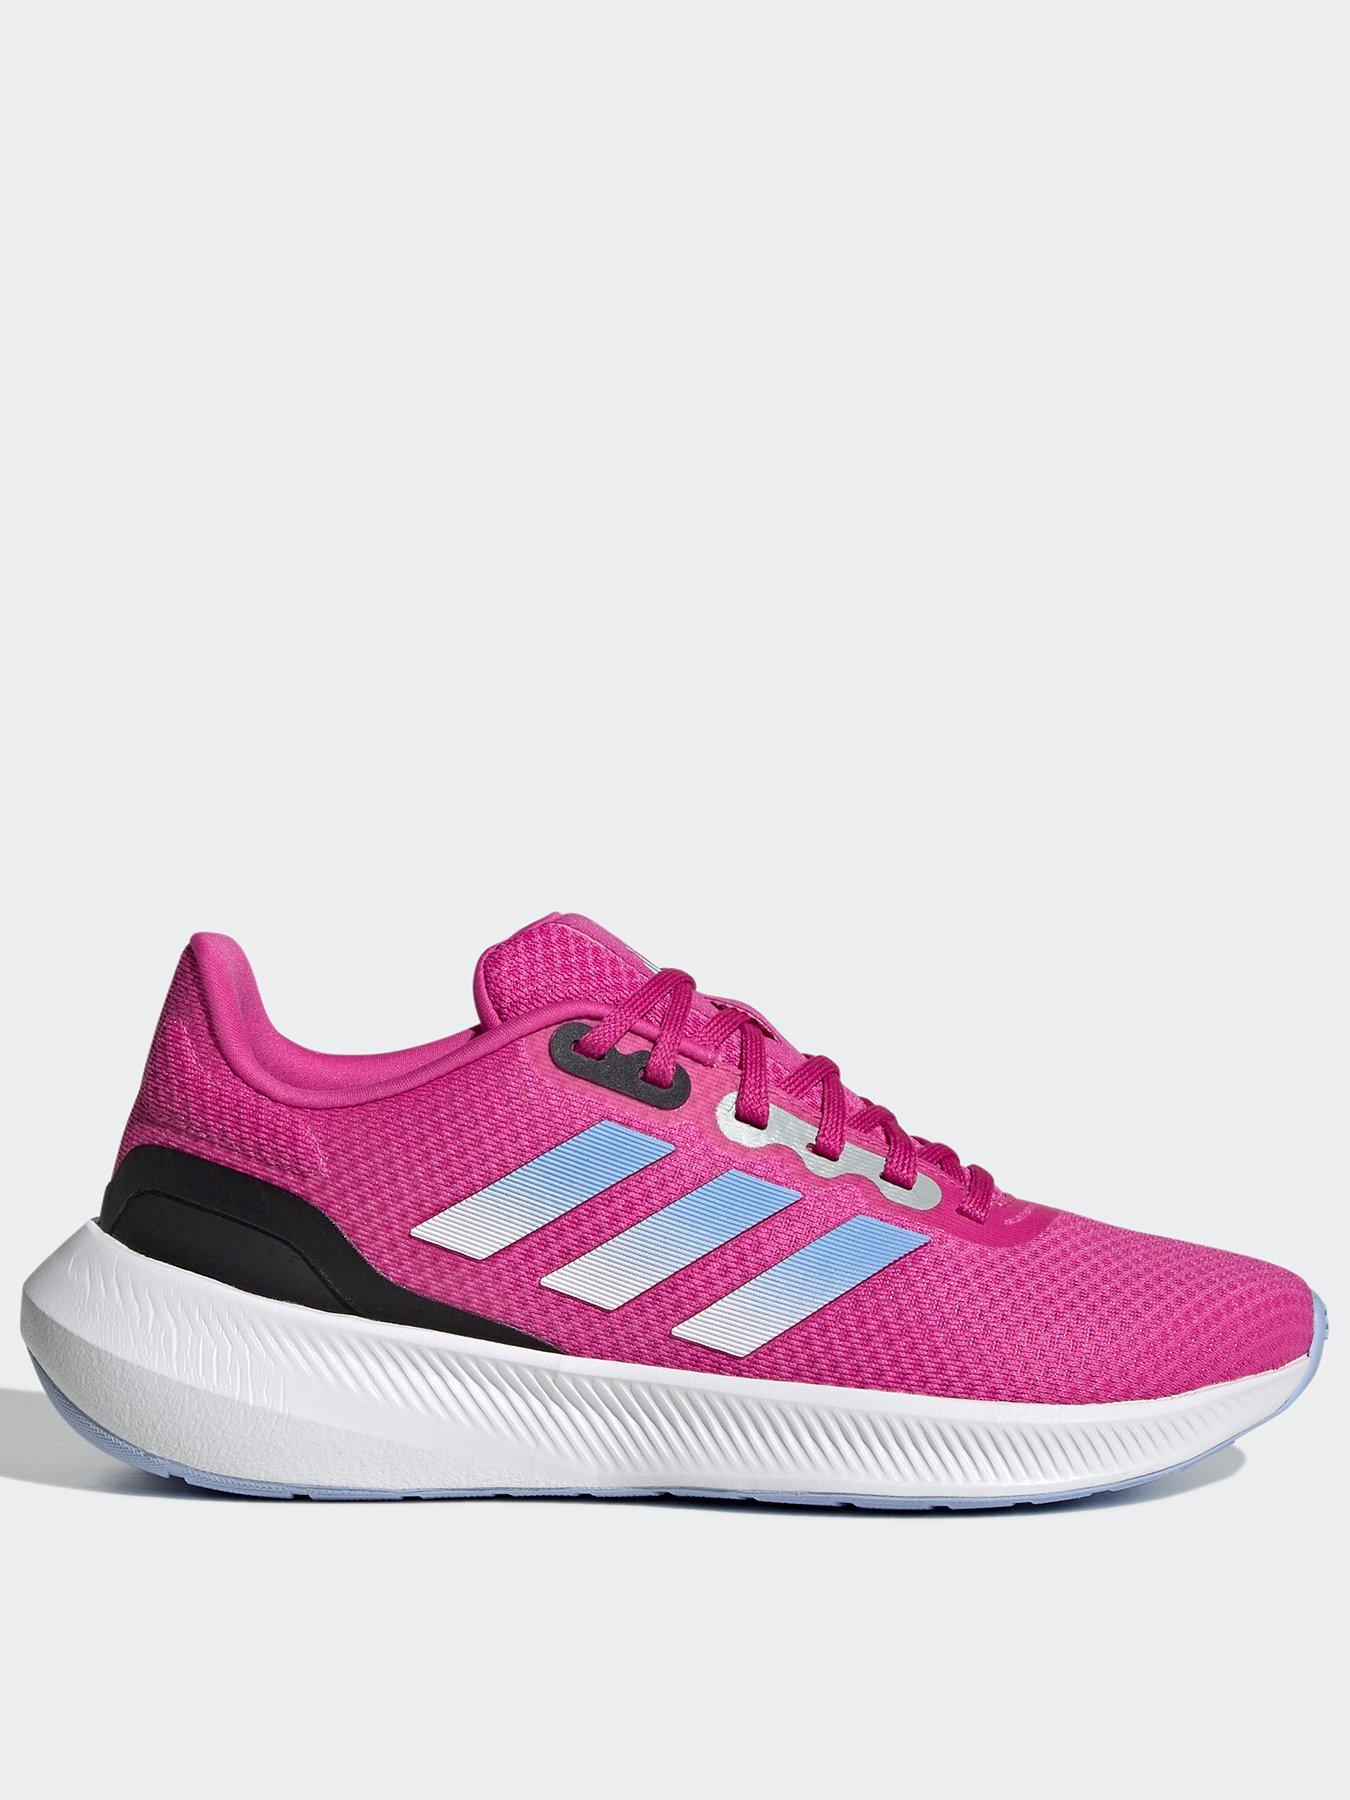 absceso Levántate Oxidado Pink | Adidas | Trainers | Women | www.very.co.uk